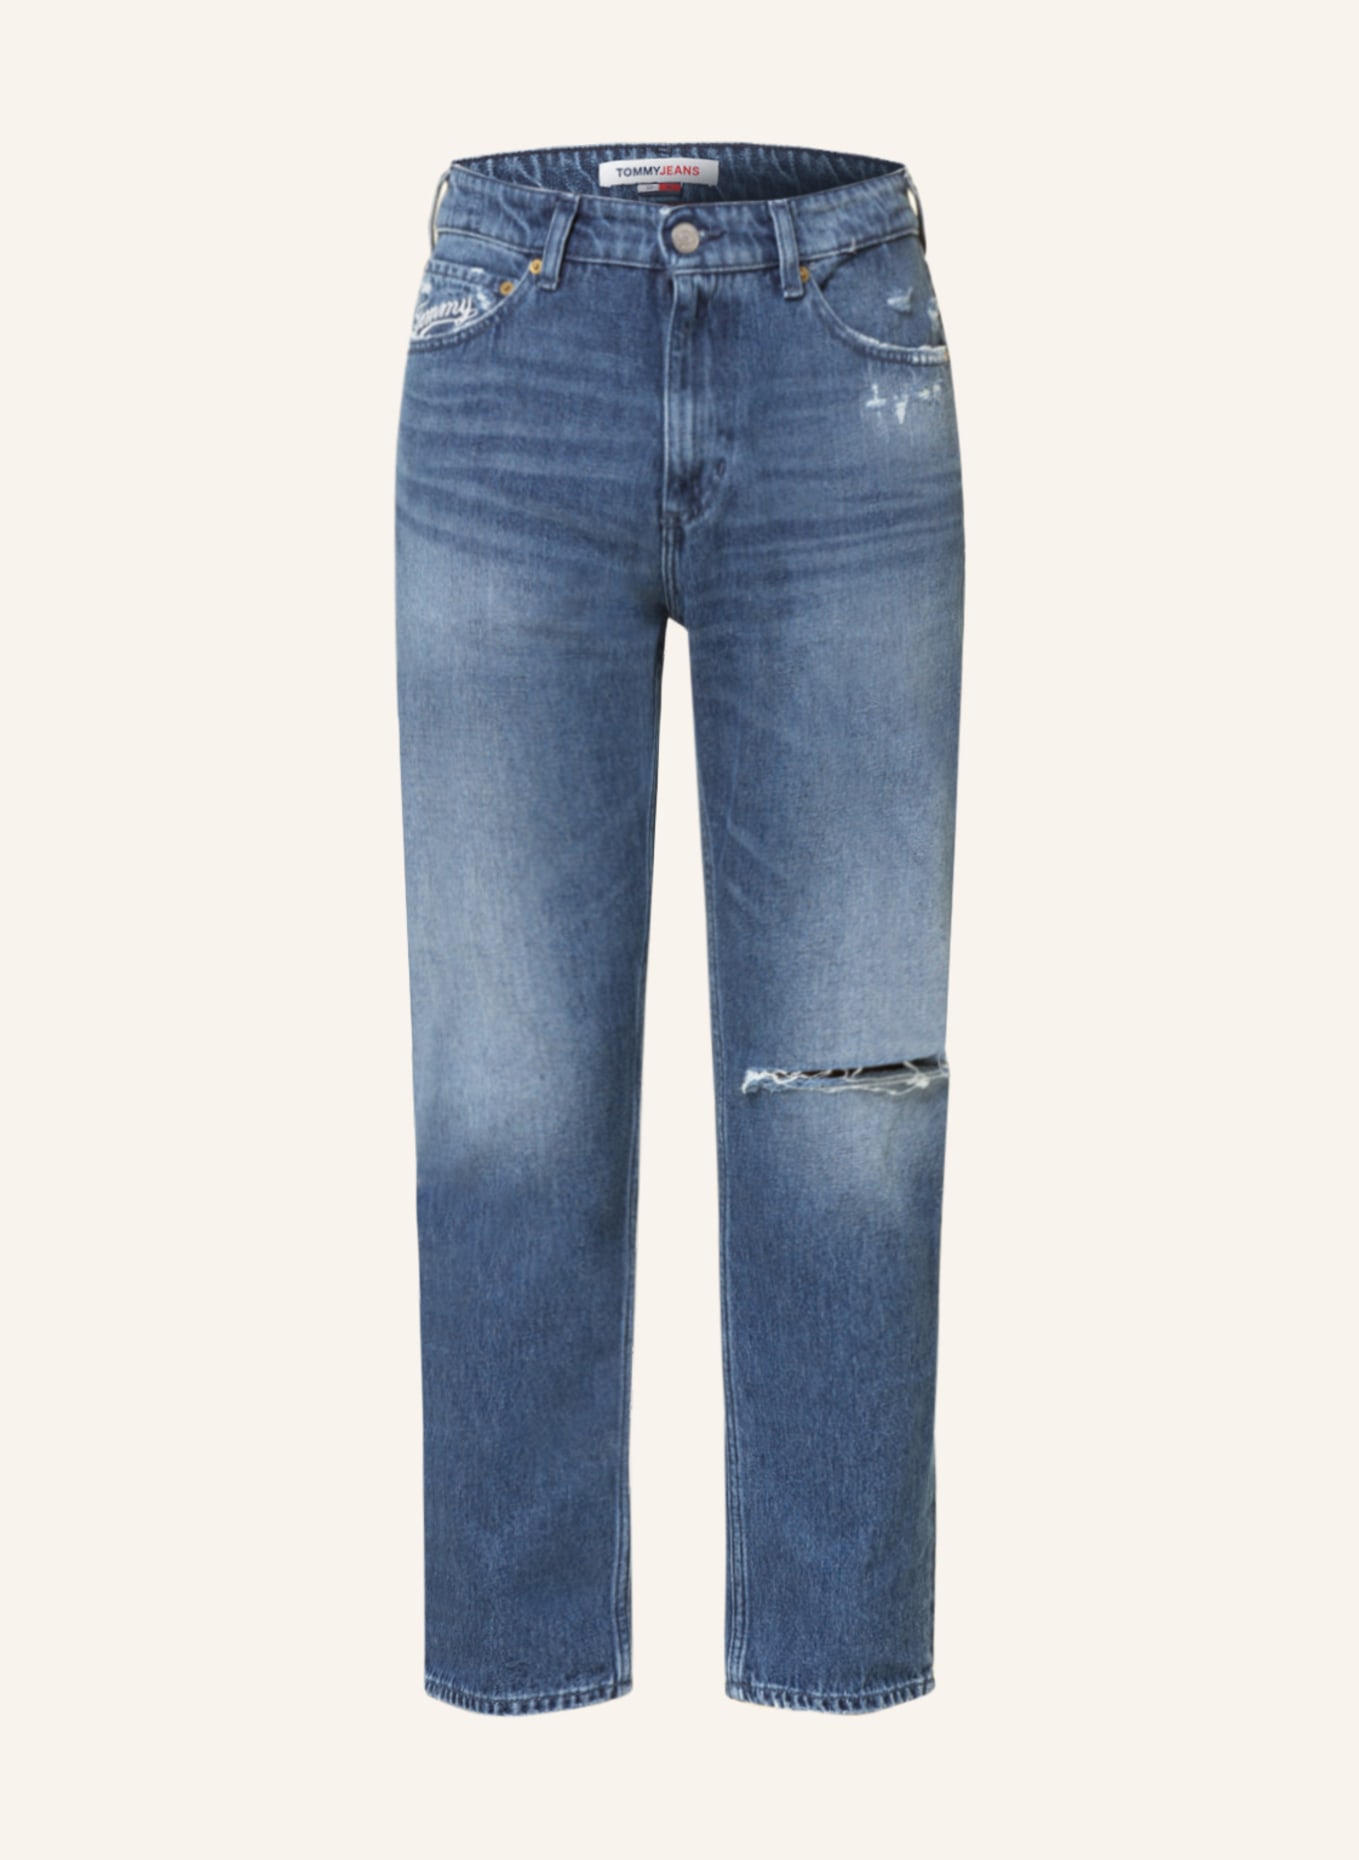 TOMMY JEANS Destroyed Jeans SCANTON Slim Fit, Farbe: 1A5 Denim Medium 02 (Bild 1)